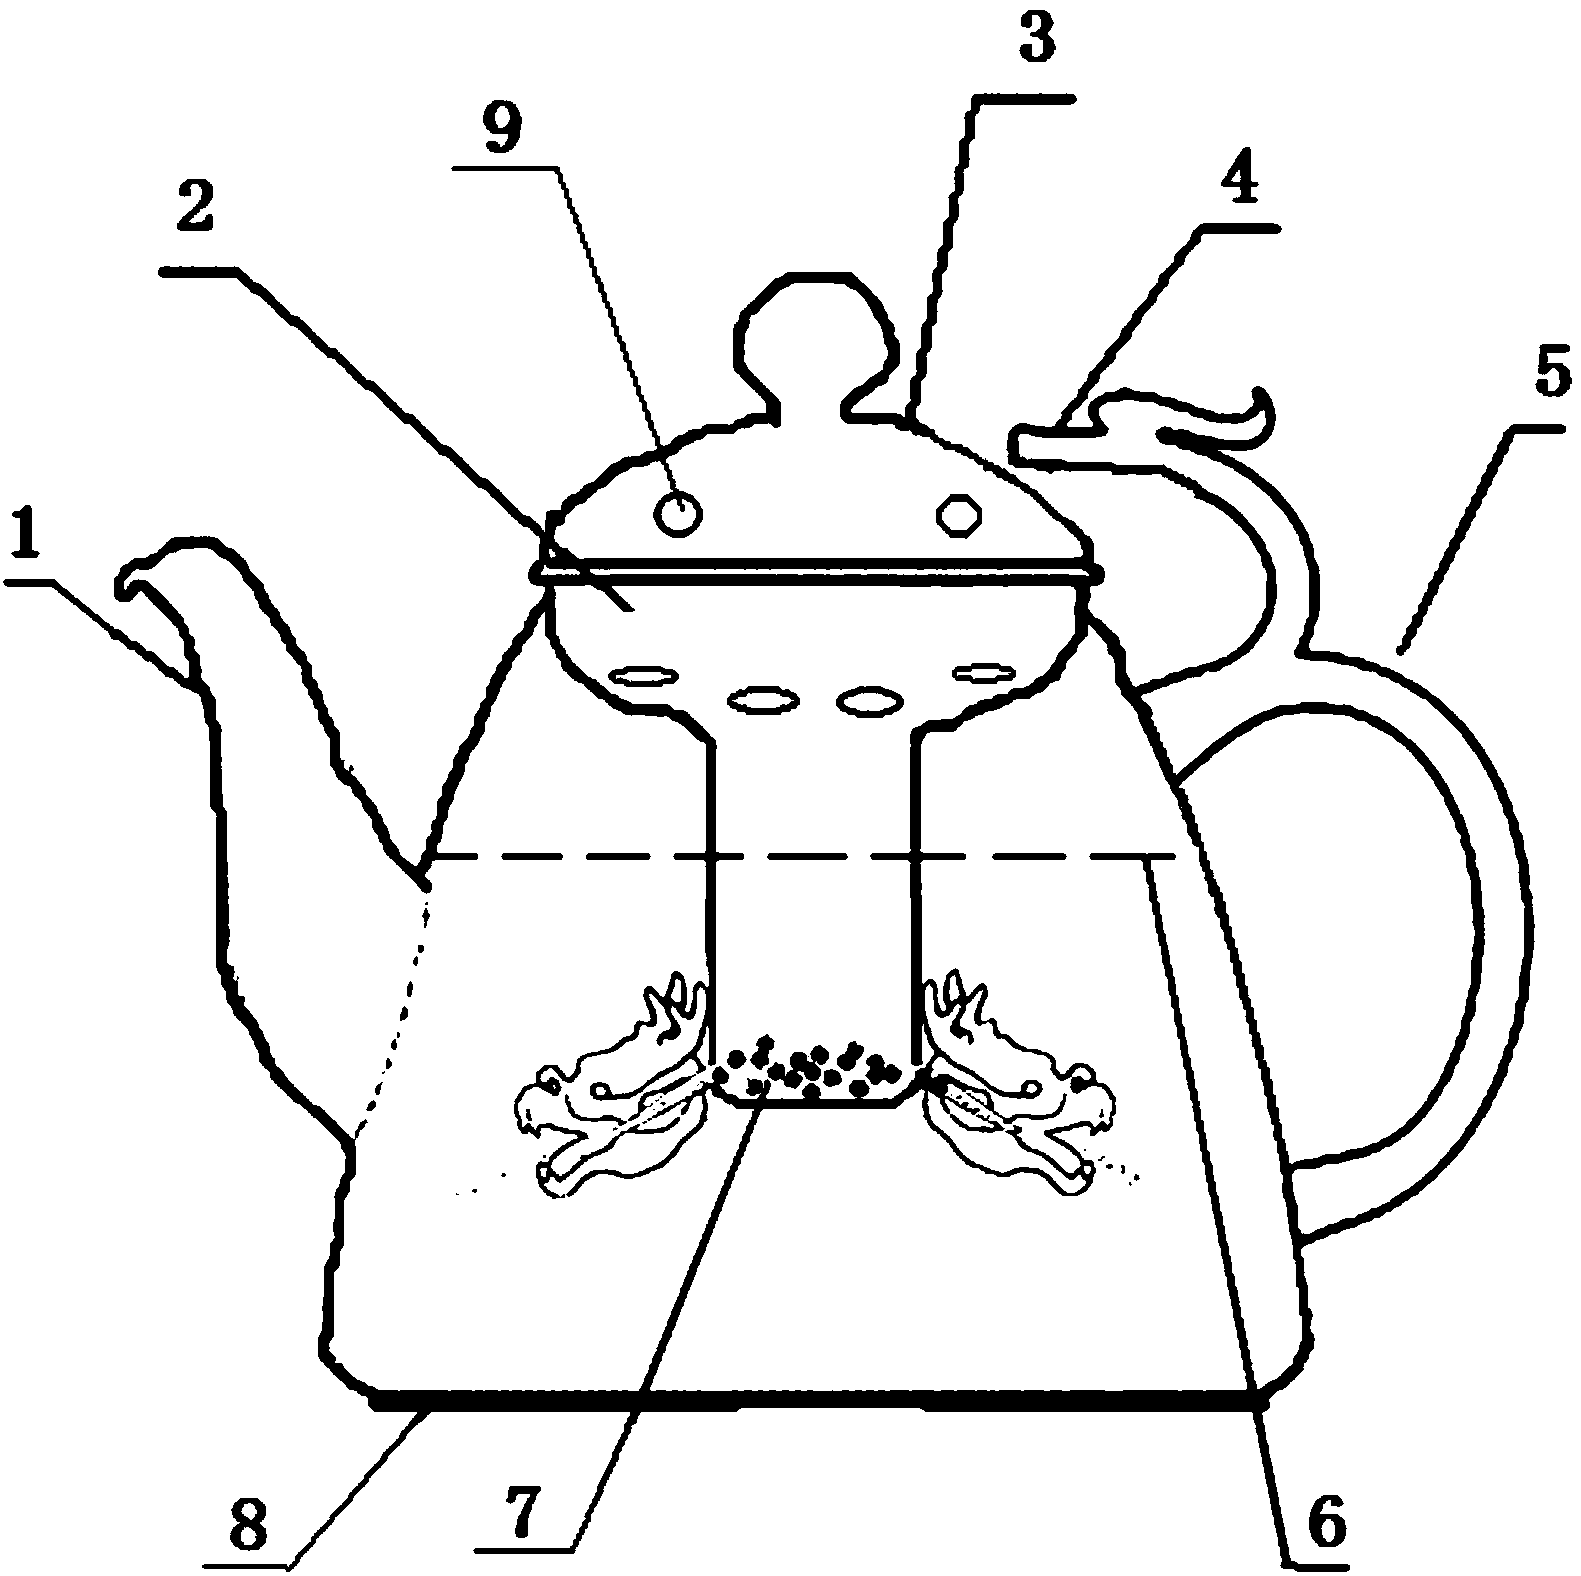 Tea set used for boiling, dissolving and dumping tea cream